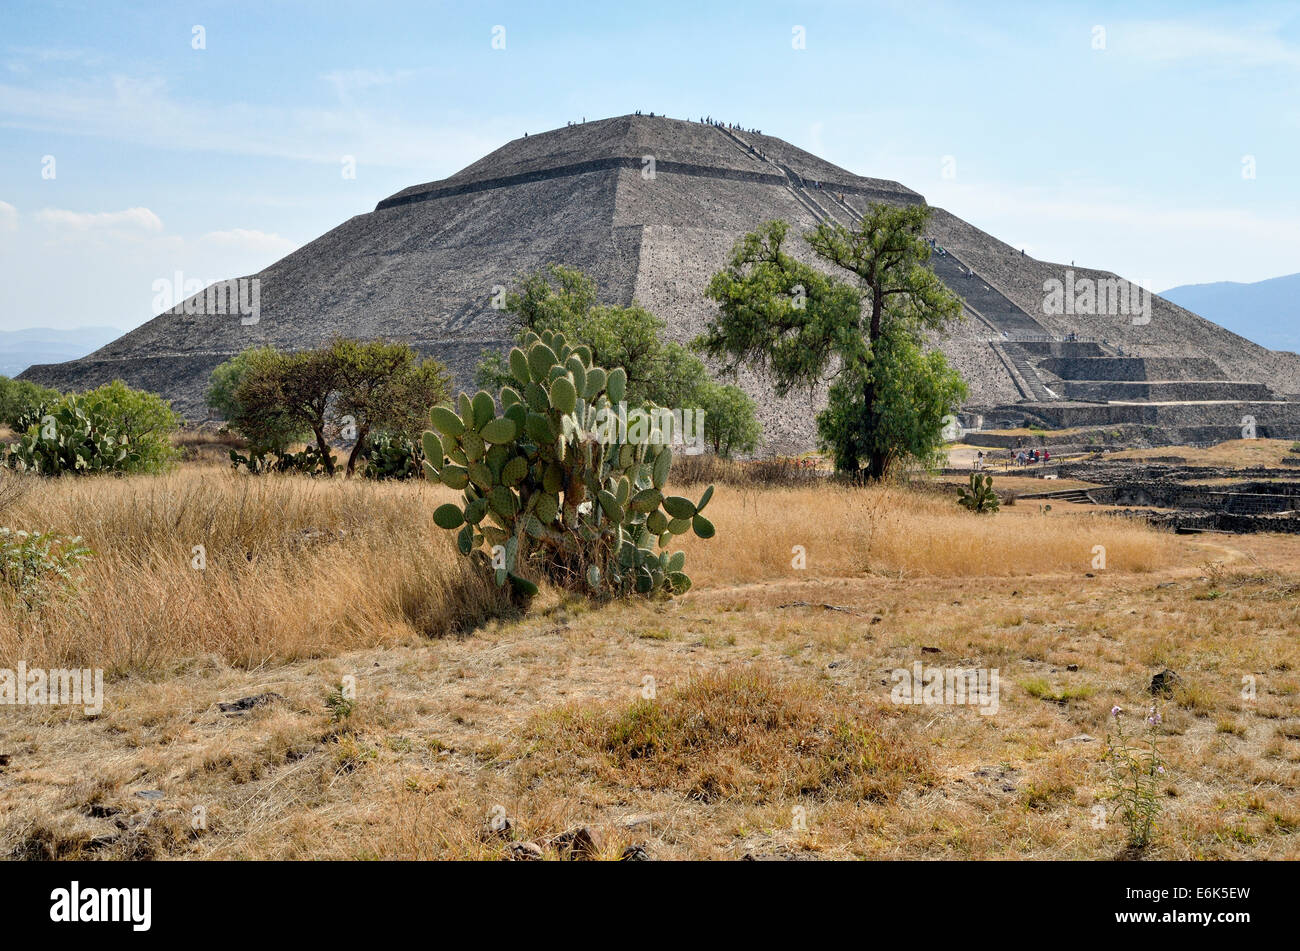 Pyramide-del-Sol oder Pyramide der Sonne, UNESCO World Heritage Site archäologischen Site von Teotihuacan, México, Mexiko Stockfoto